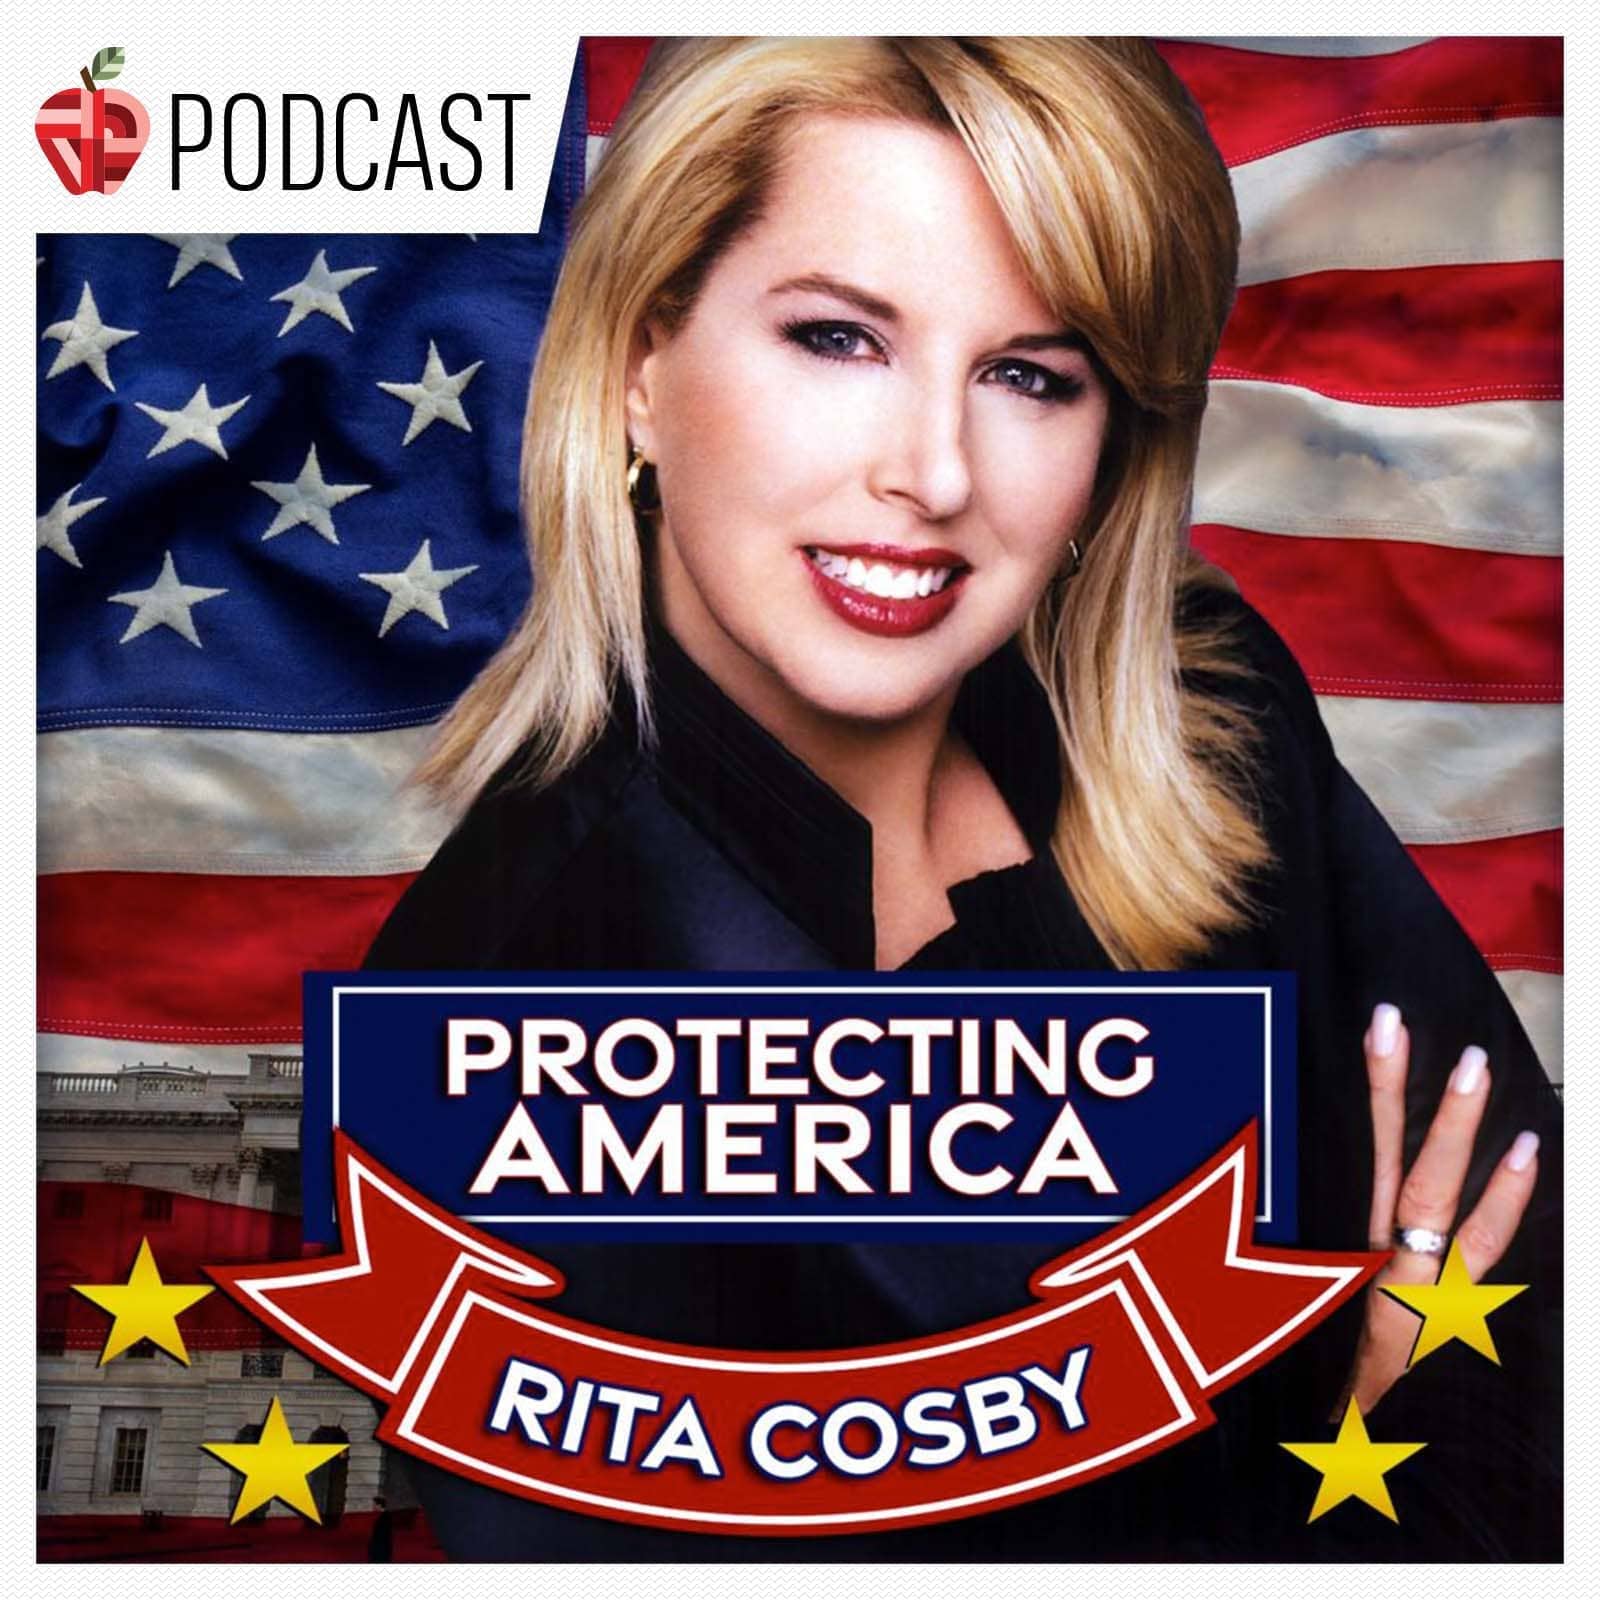 rita-cosby-protecting-america-correct-podcast-new-logo-47